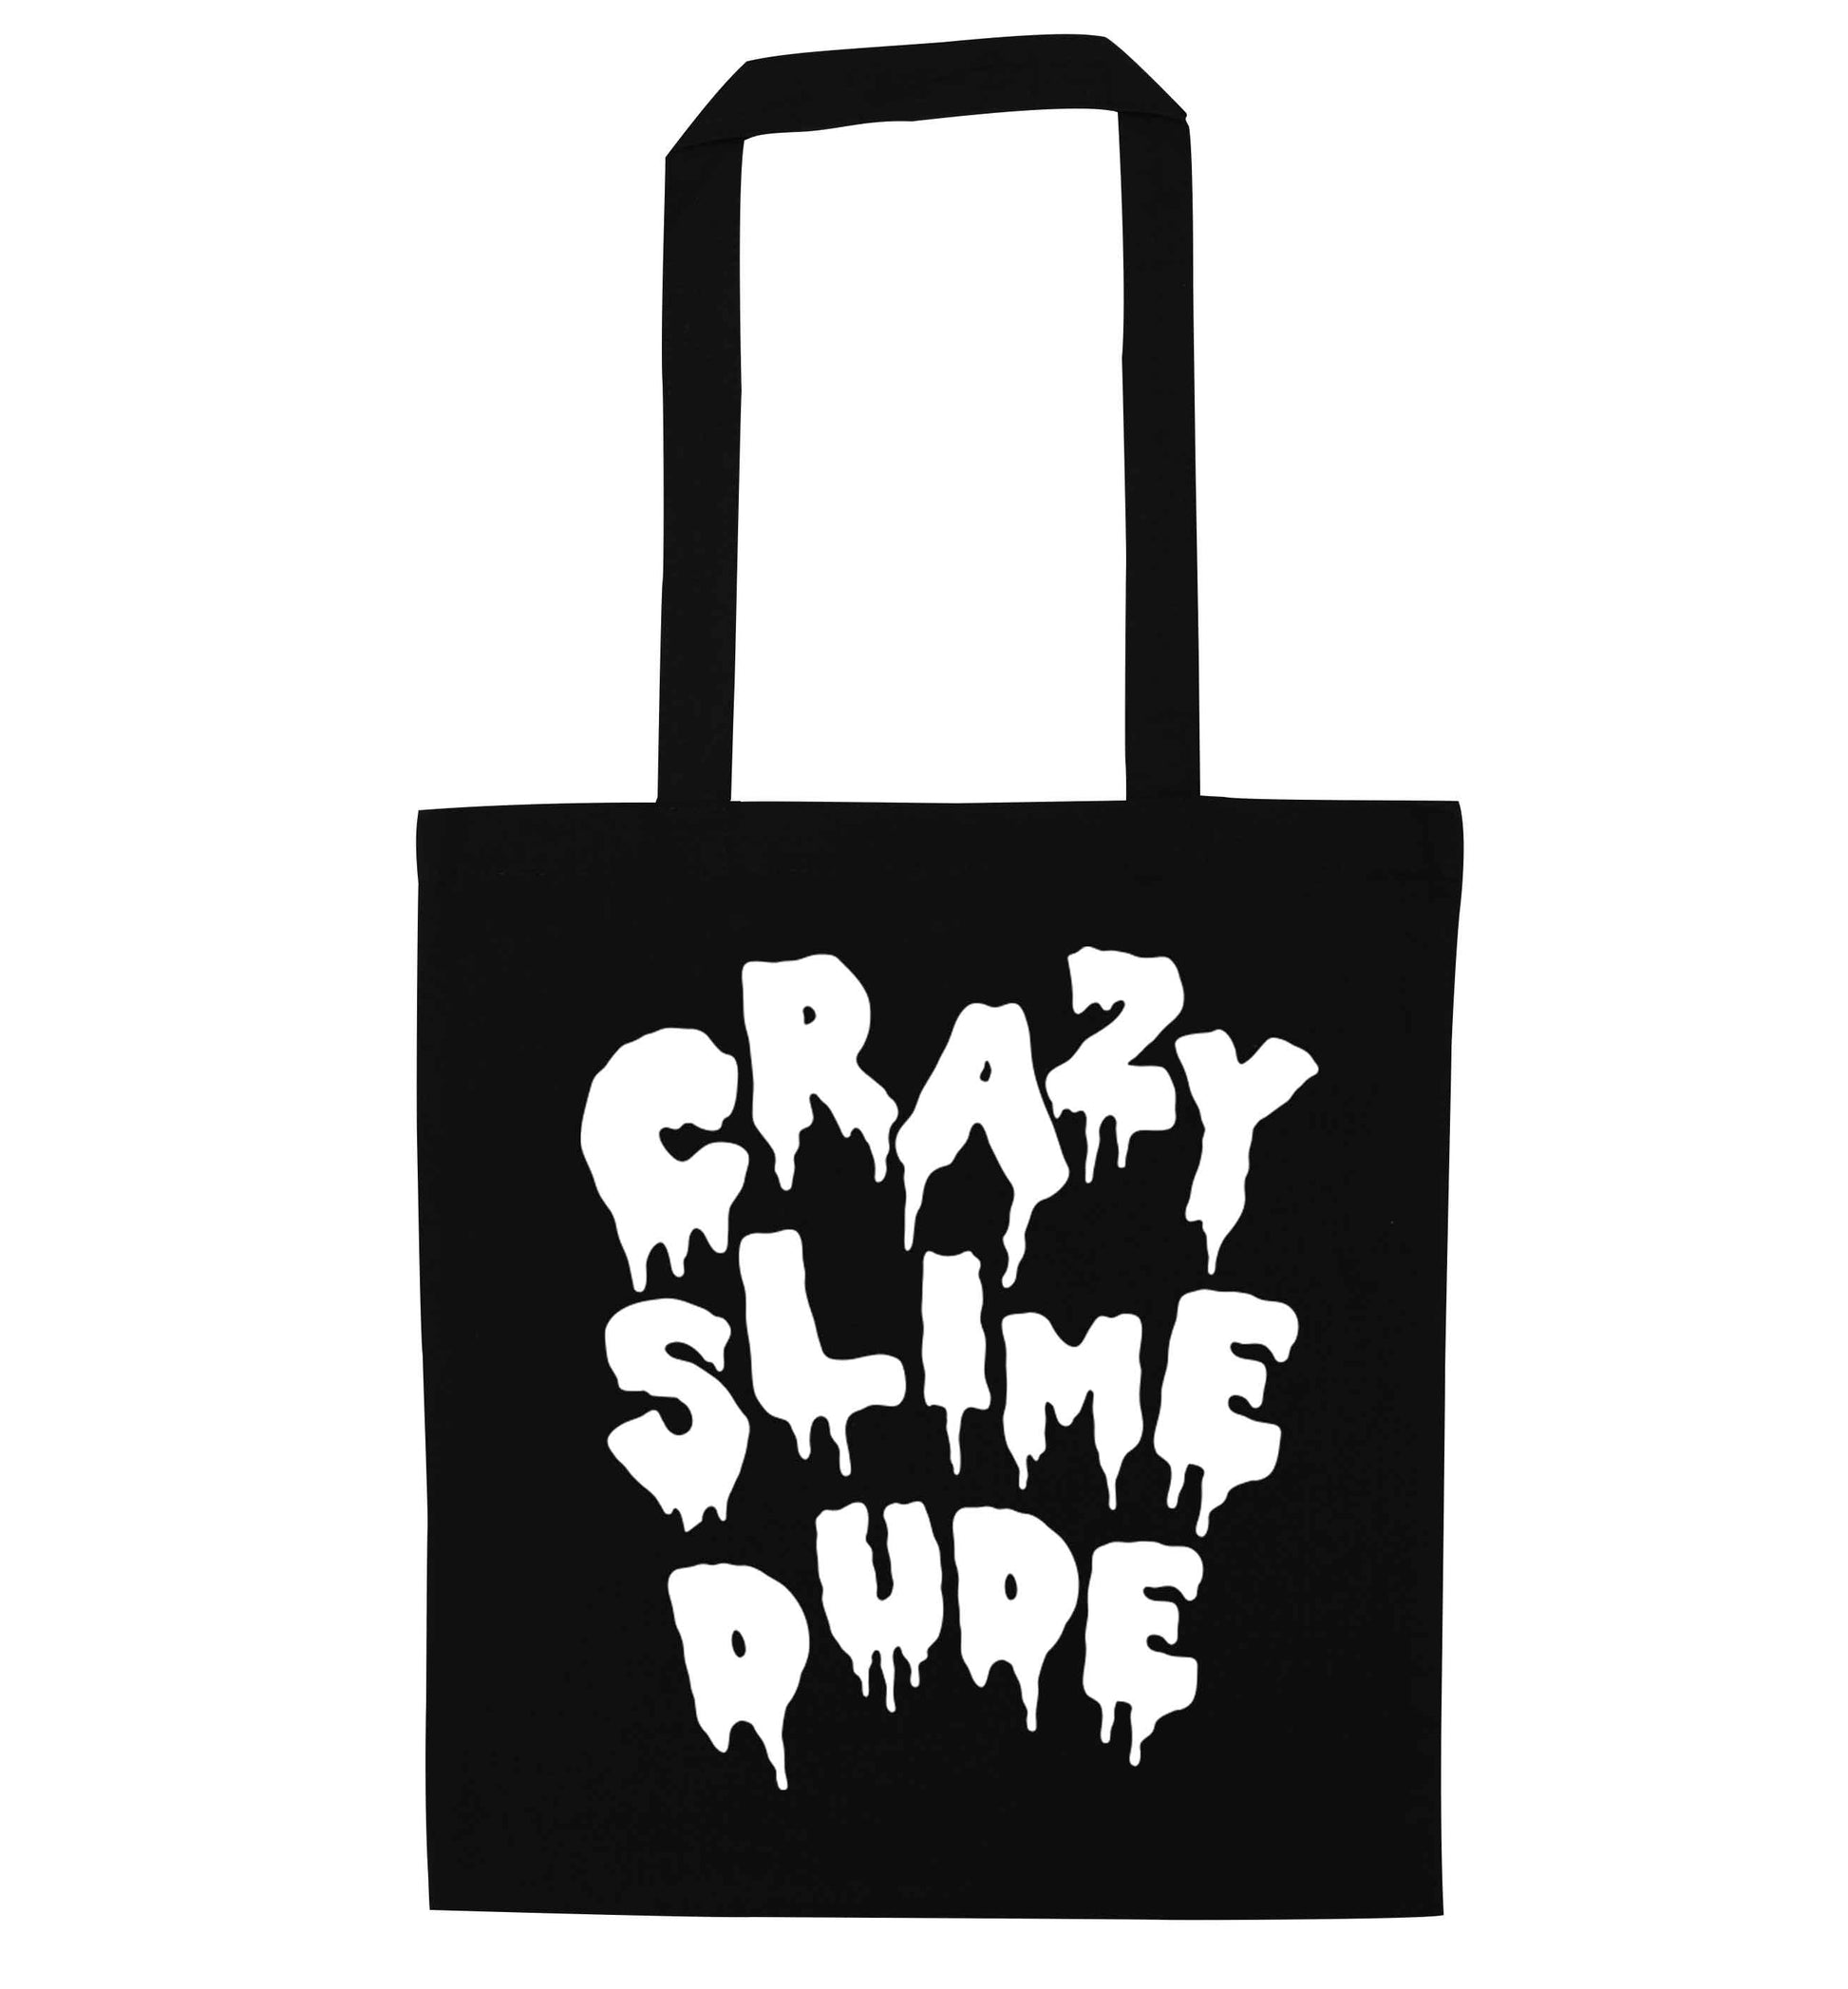 Crazy slime dude black tote bag